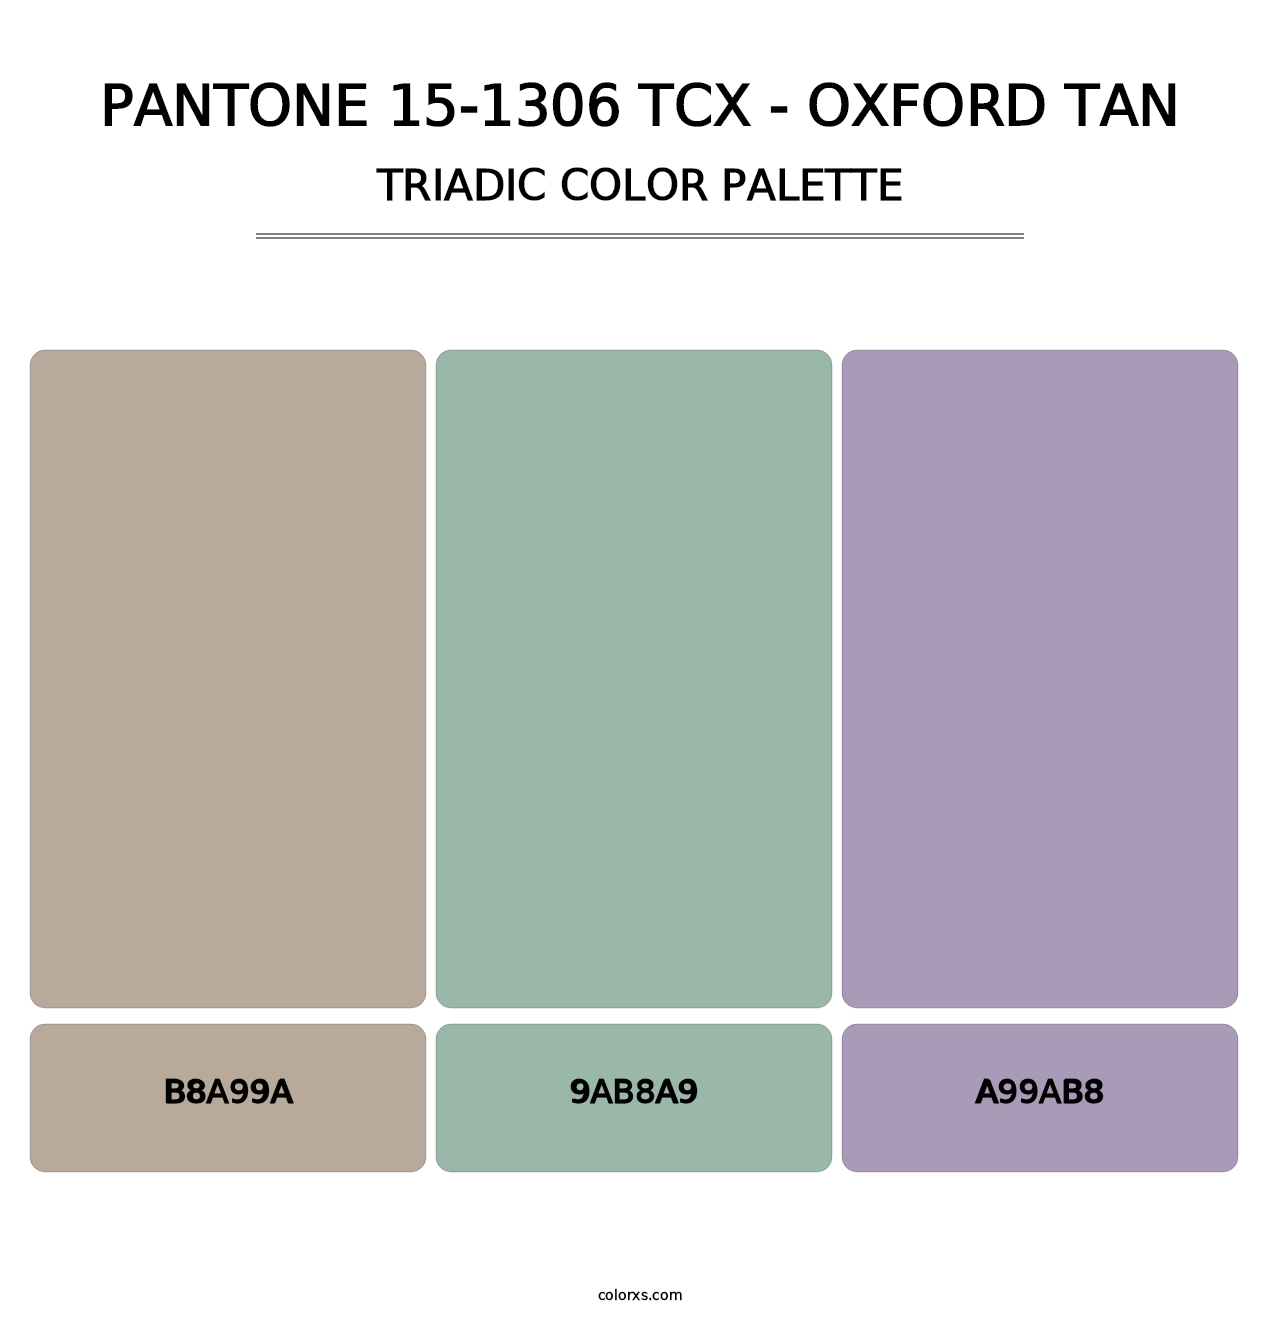 PANTONE 15-1306 TCX - Oxford Tan - Triadic Color Palette